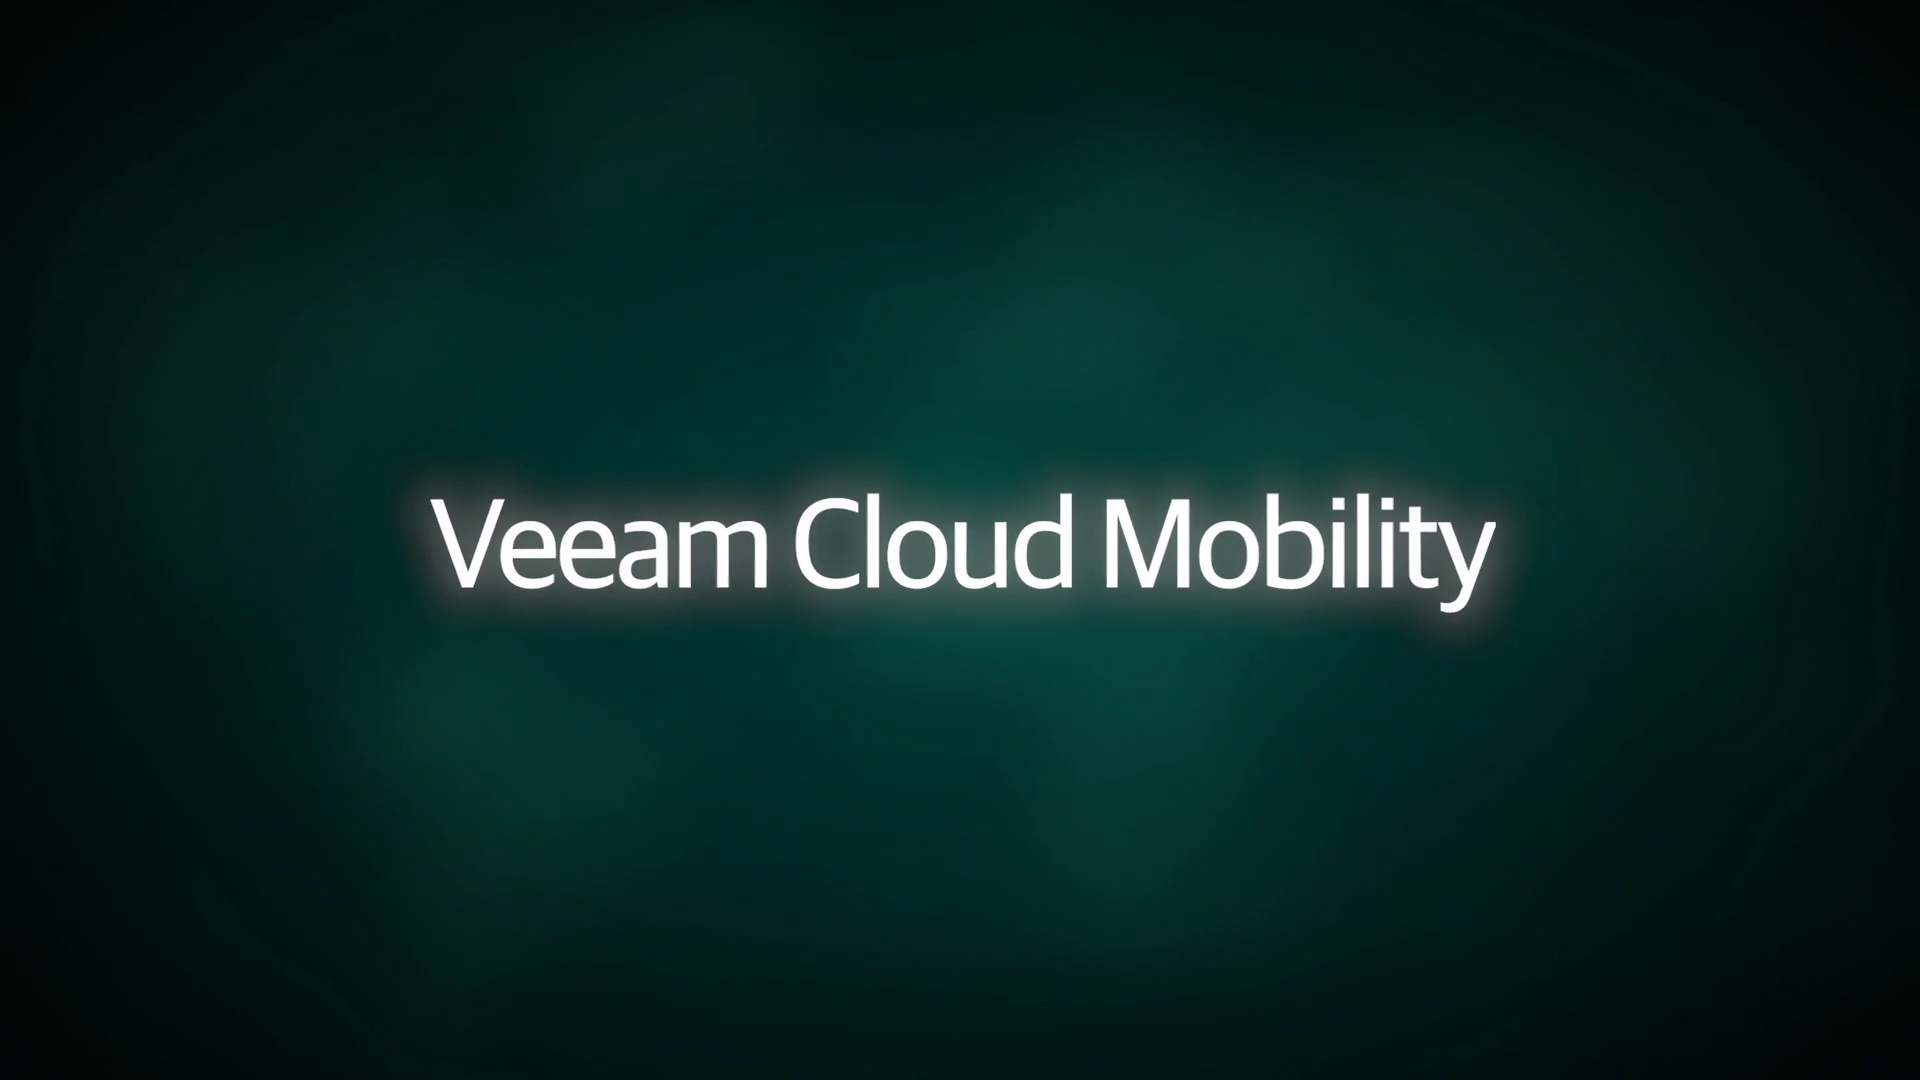 Veeam Cloud Mobility